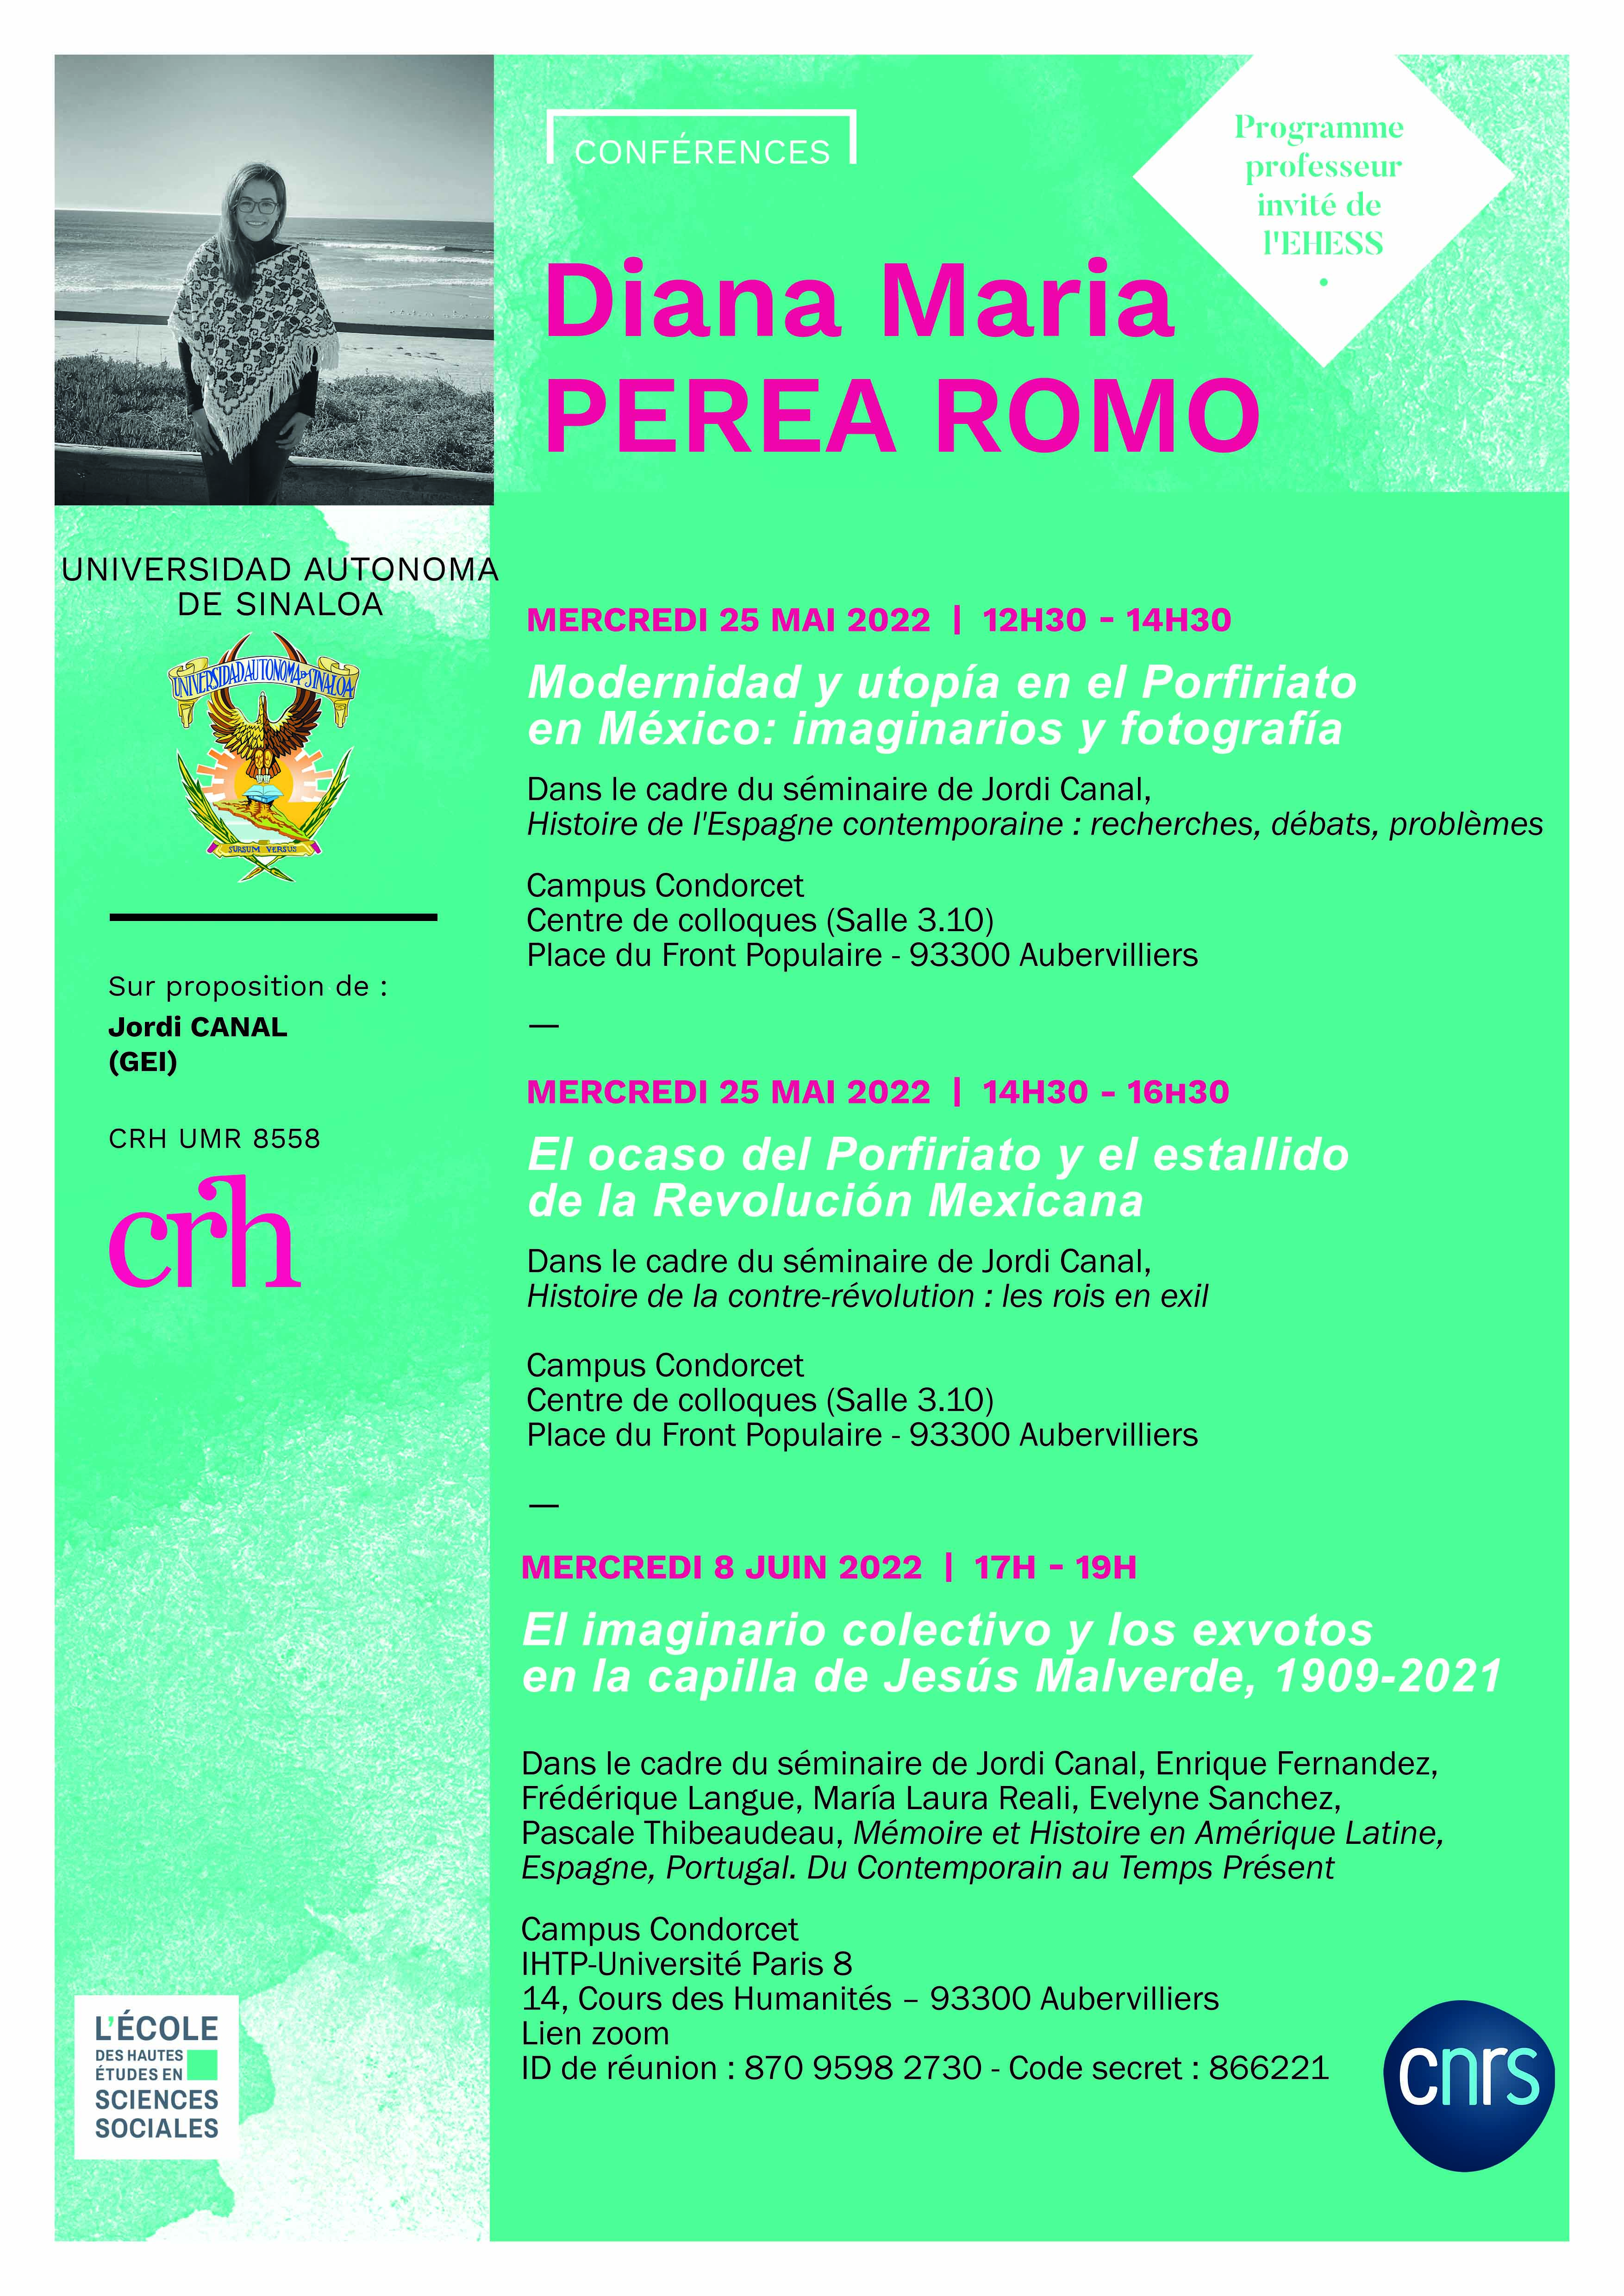 Conférences de Diana María Perea Romo (Universidad Autónoma de Sinaloa)